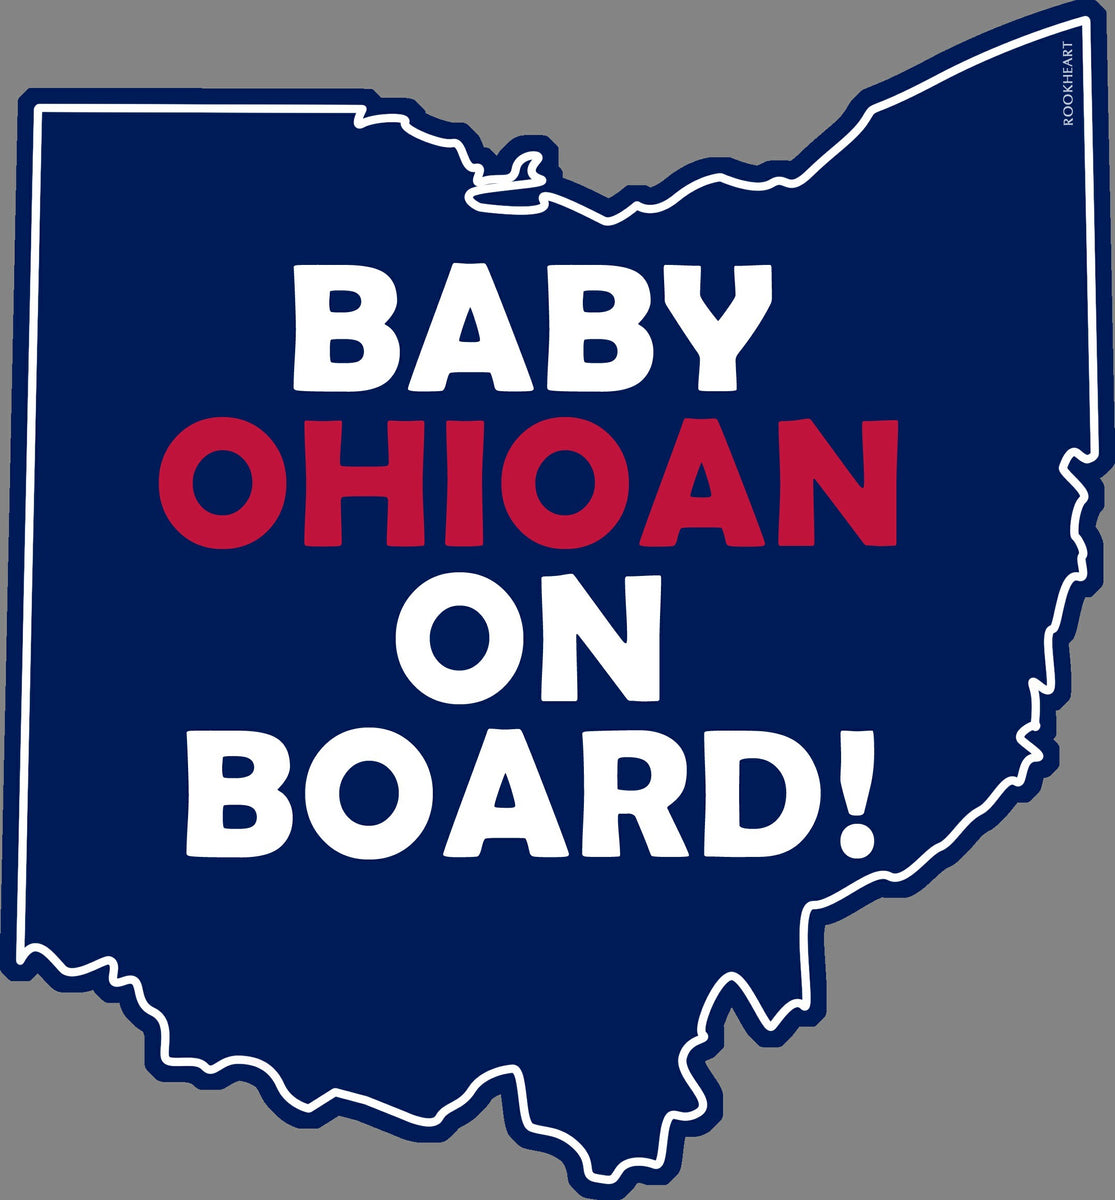 Origin of 'Baby on Board' Signs